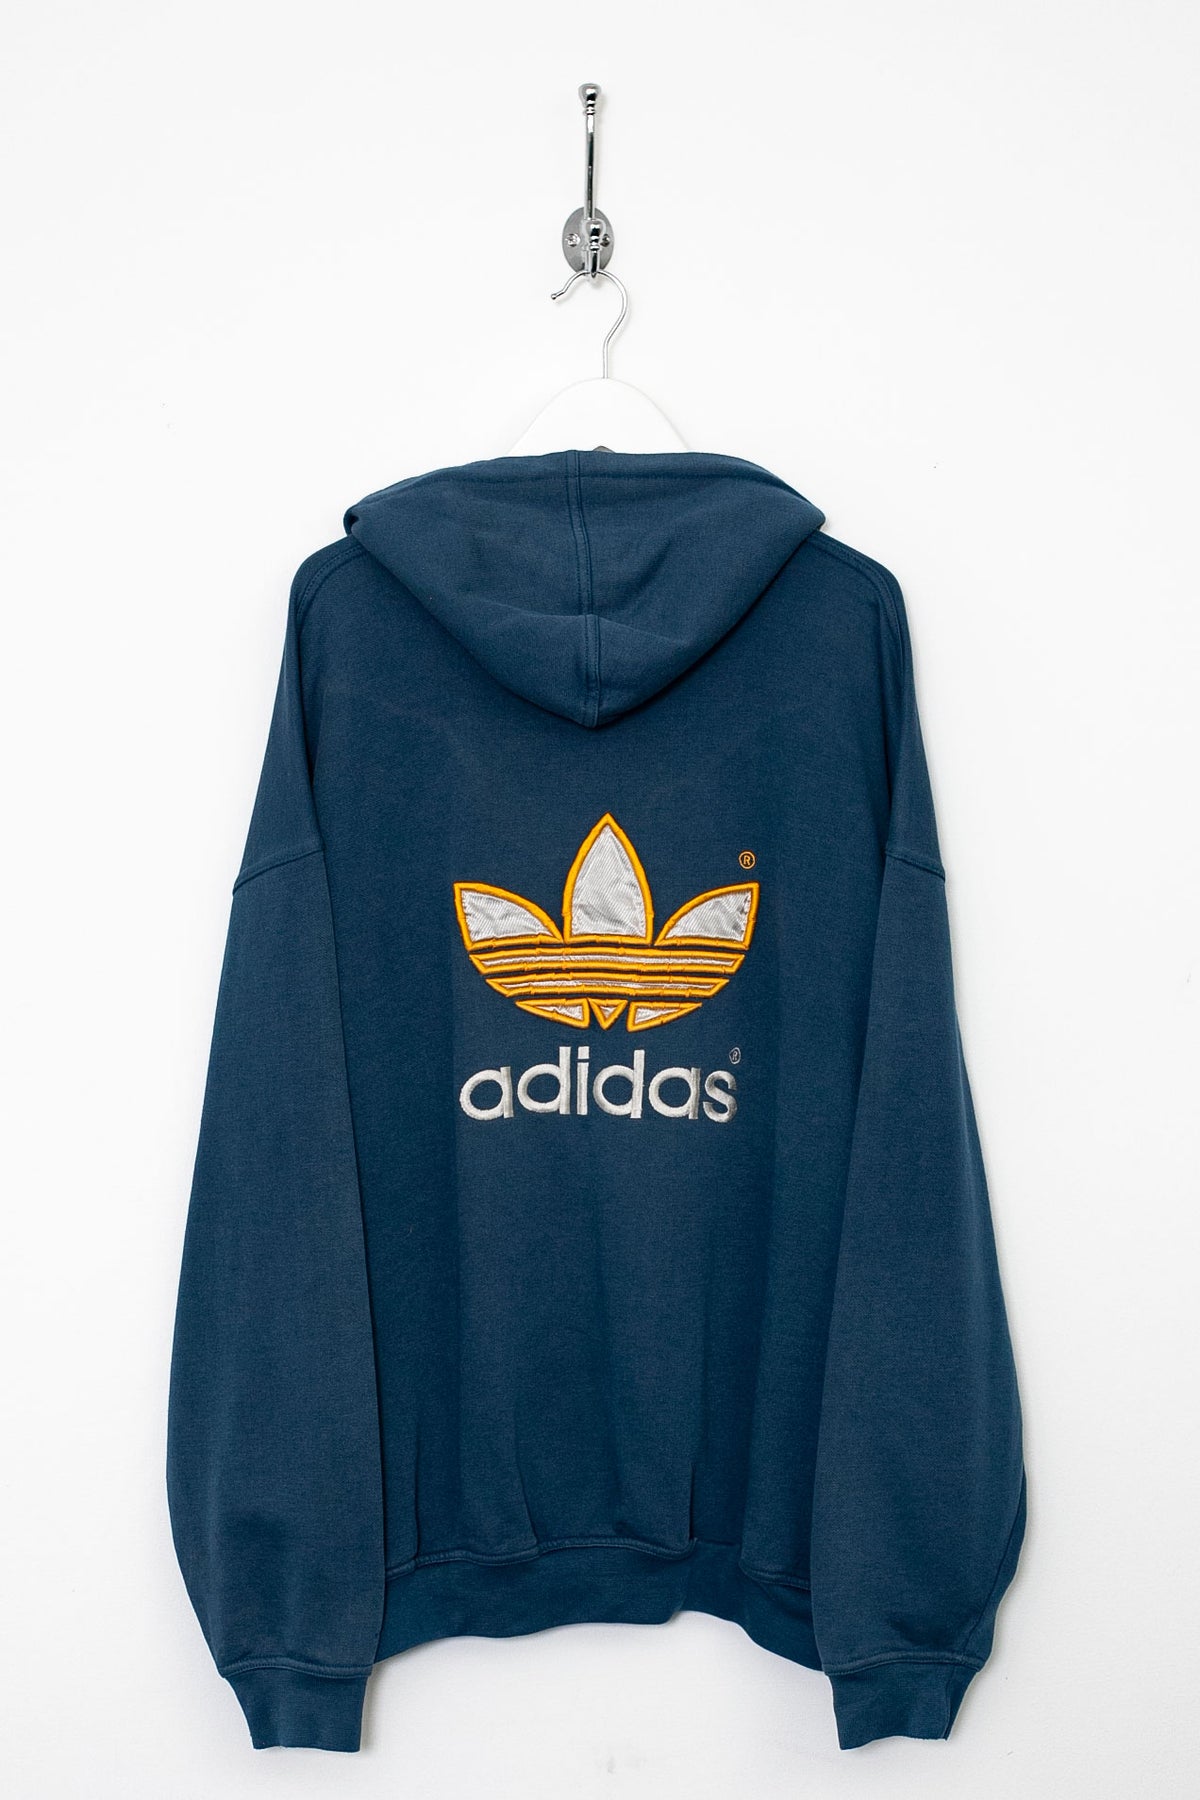 90s Adidas Hoodie (XL)